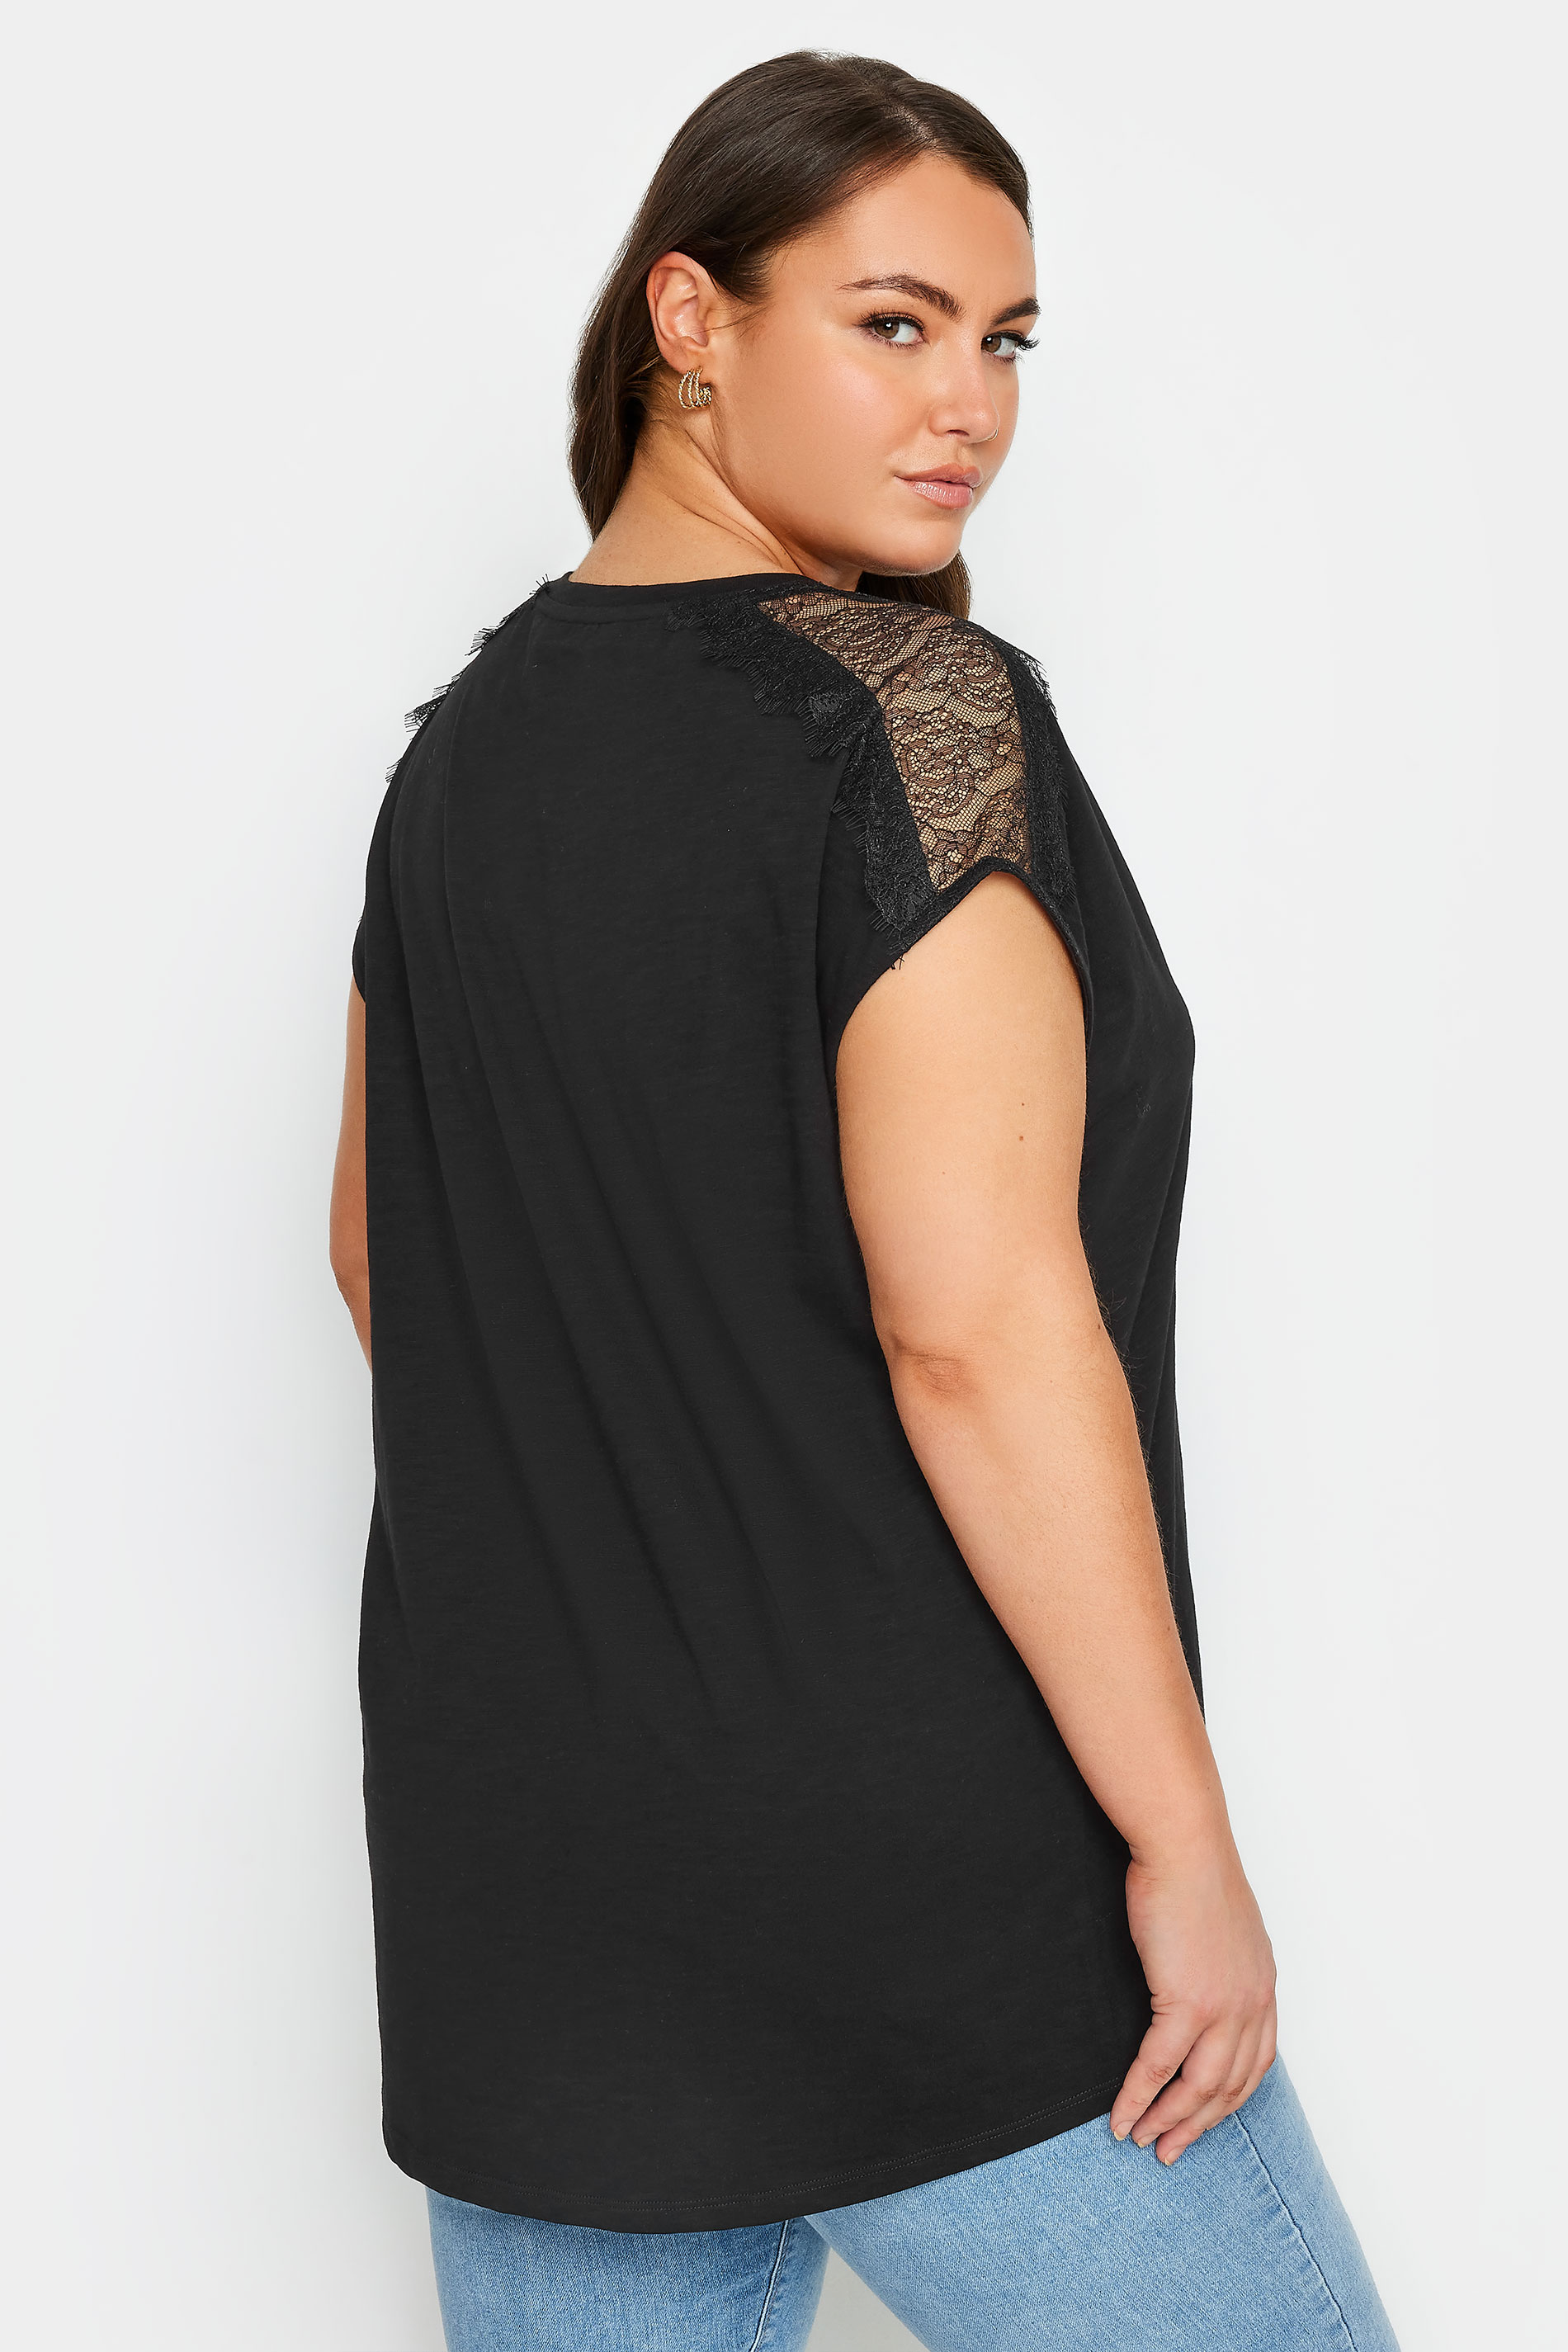 YOURS Plus Size Black Lace Shoulder T-Shirt | Yours Clothing 3